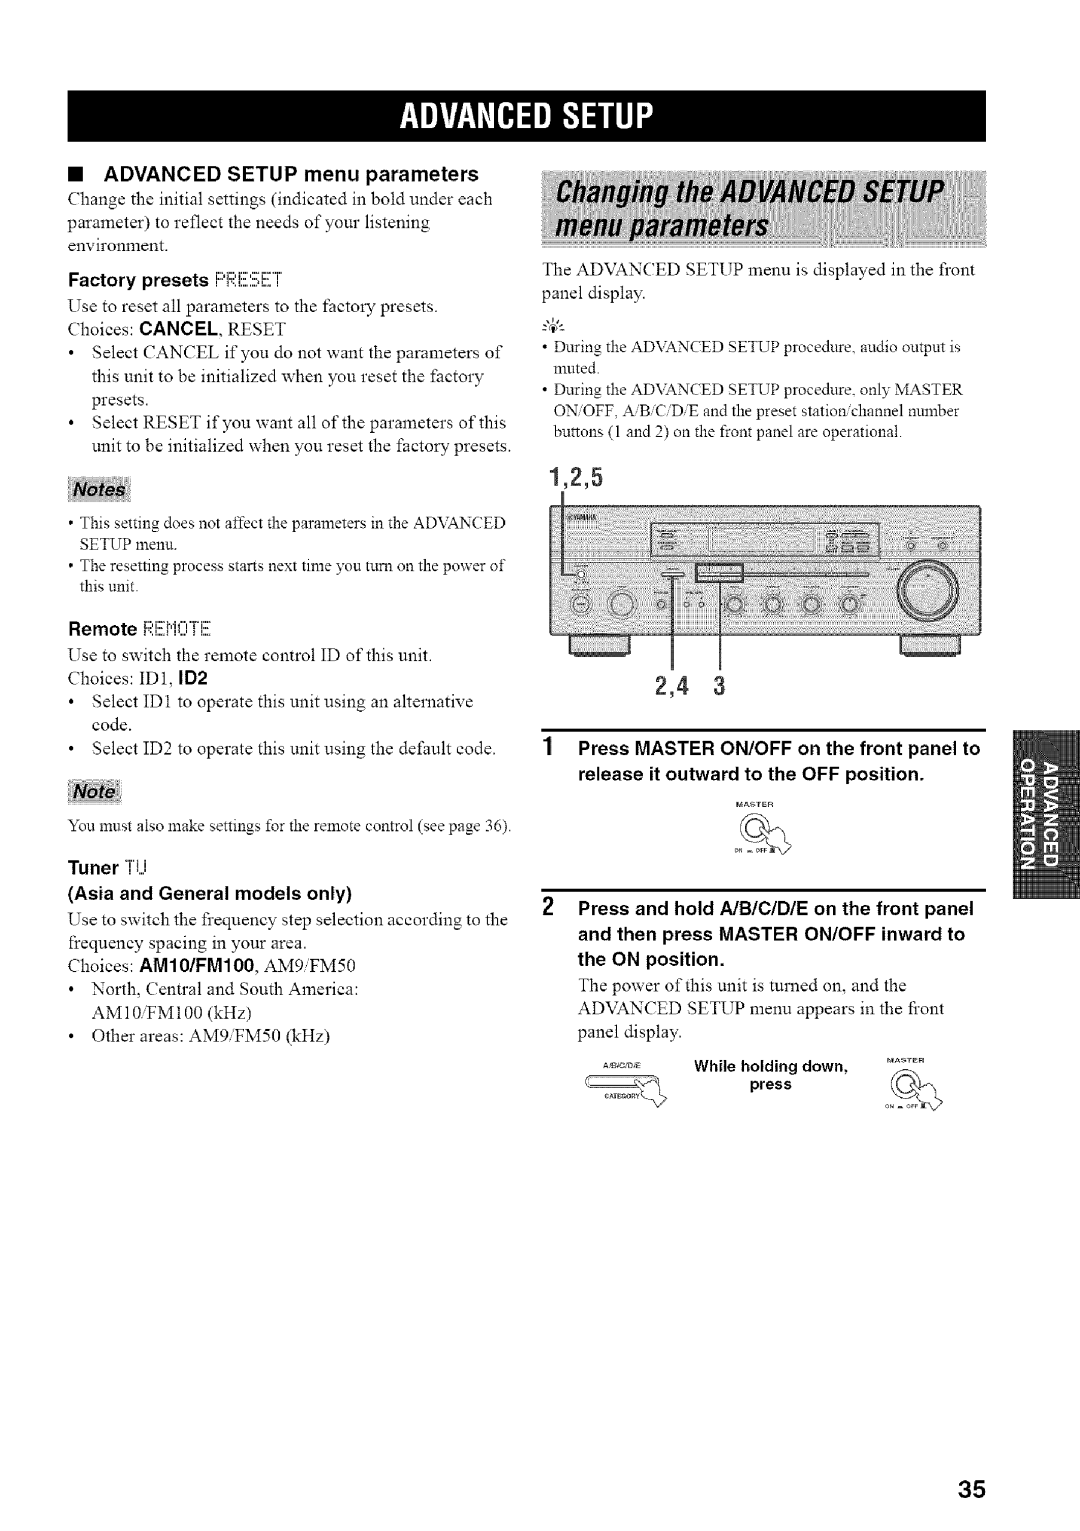 Yamaha RX-497 owner manual 1,2,5, •ADVANCED SETUP menu parameters, presso,_ 